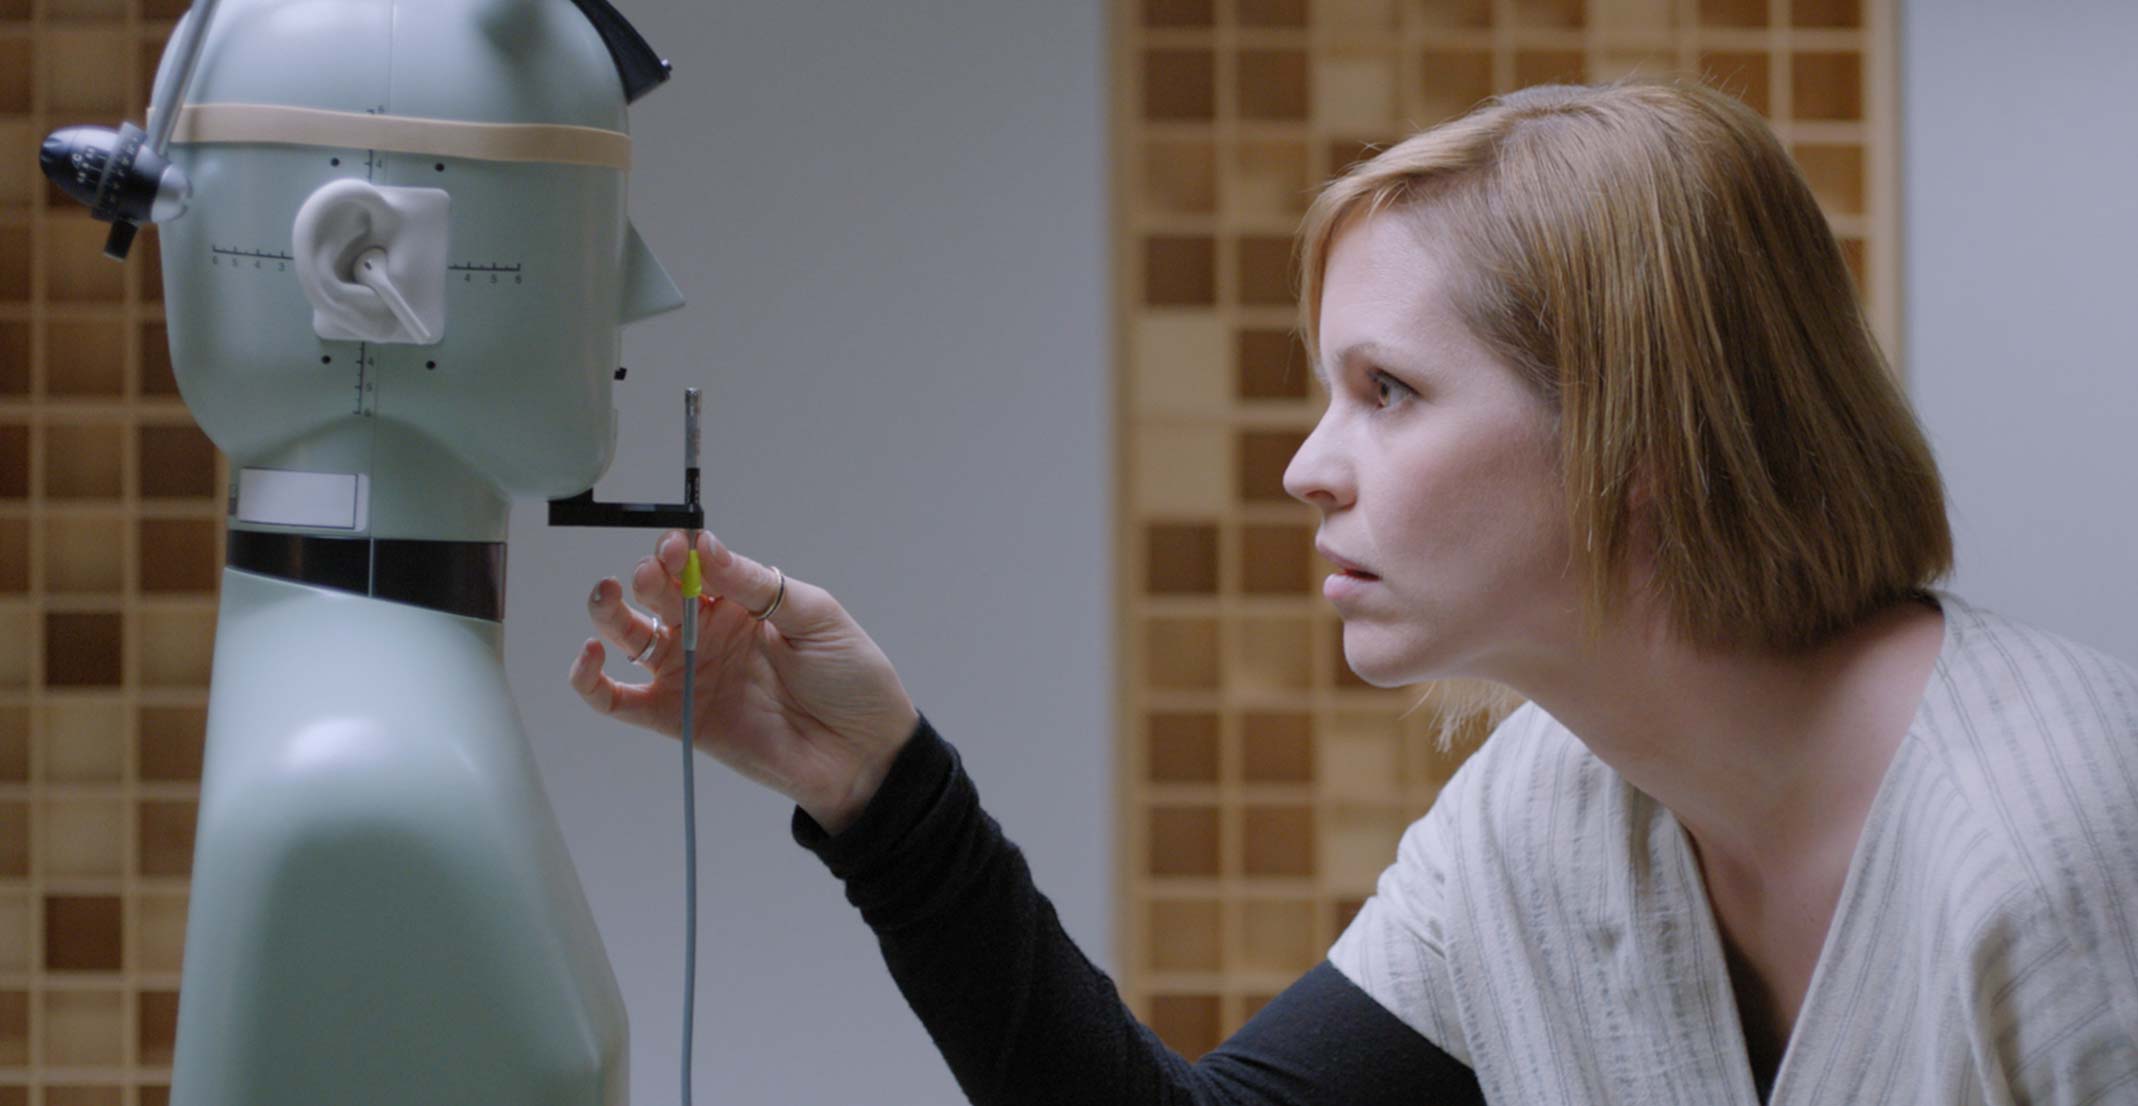 Cupertino 的一间工程实验室中，Apple 声学原型团队的经理 Suzie 正在调整人体模型面前的麦克风